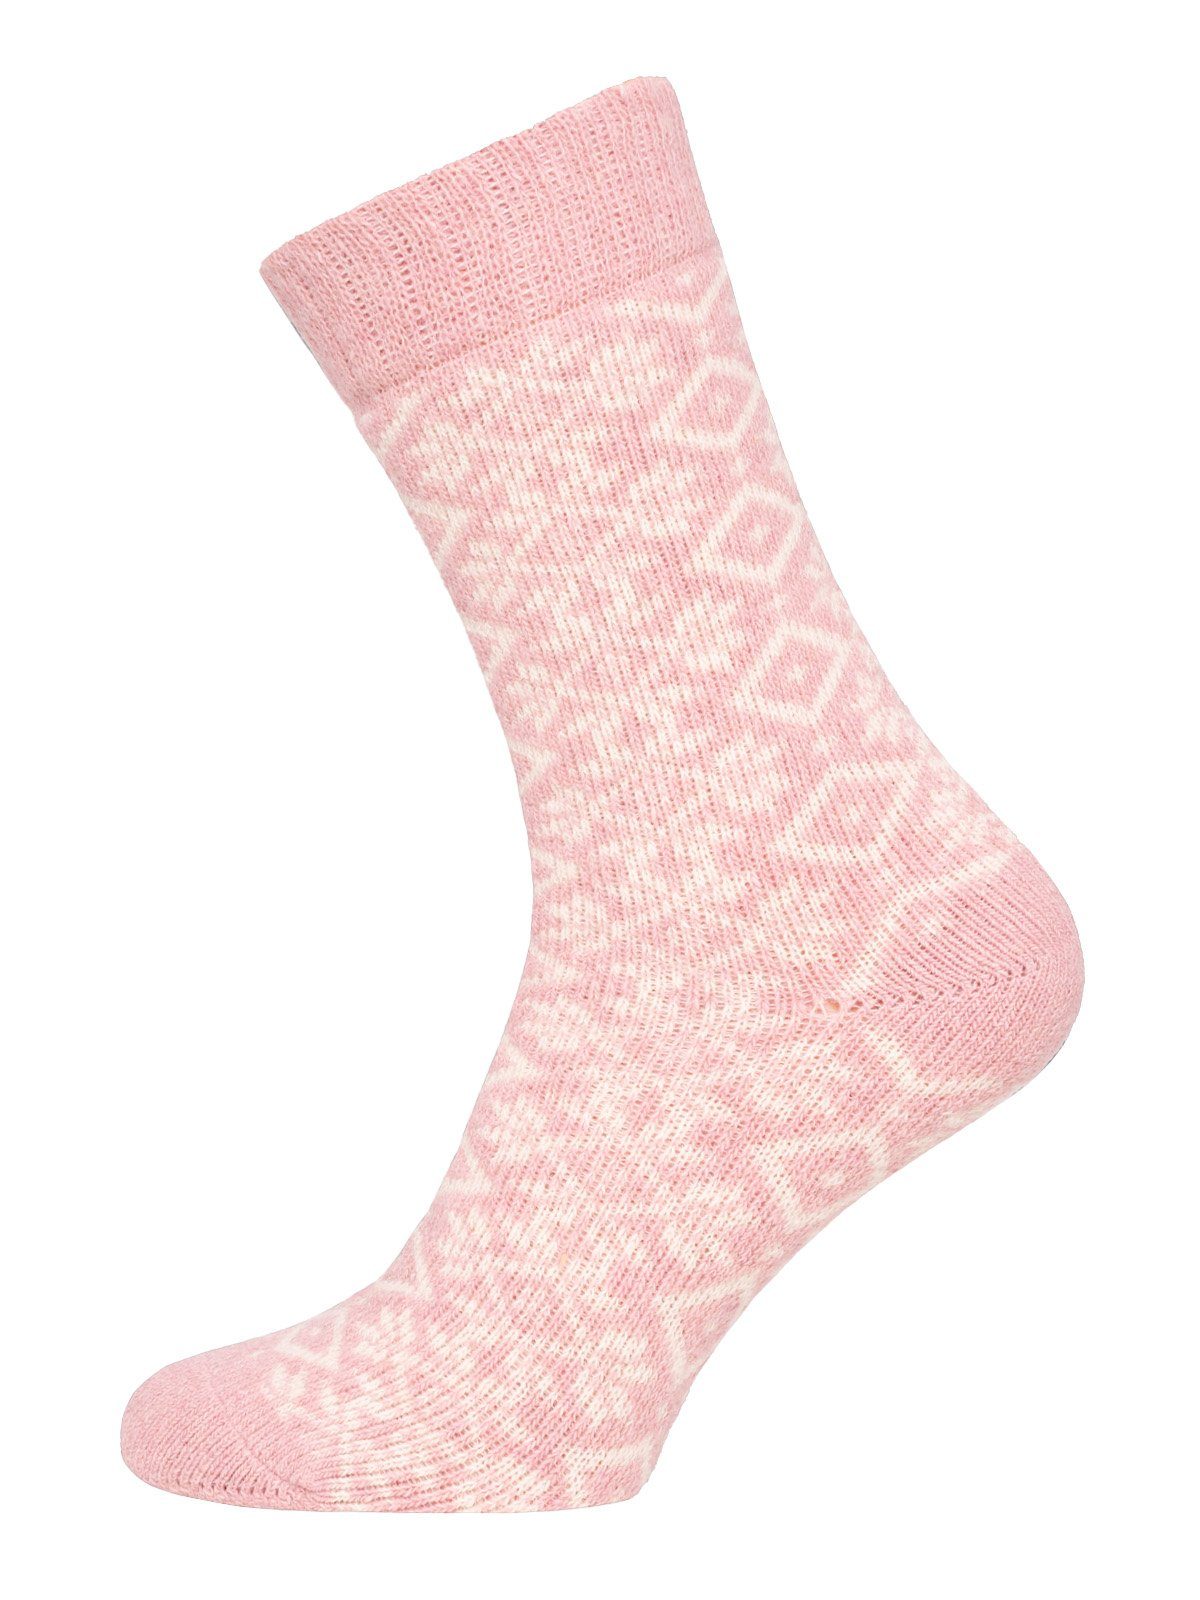 HomeOfSocks Socken Hygge Socken Dick Für Herren & Damen mit Wolle Dicke Socken Hyggelig Warm Mit Hohem 45% Wollanteil In Bunten Design Rosa